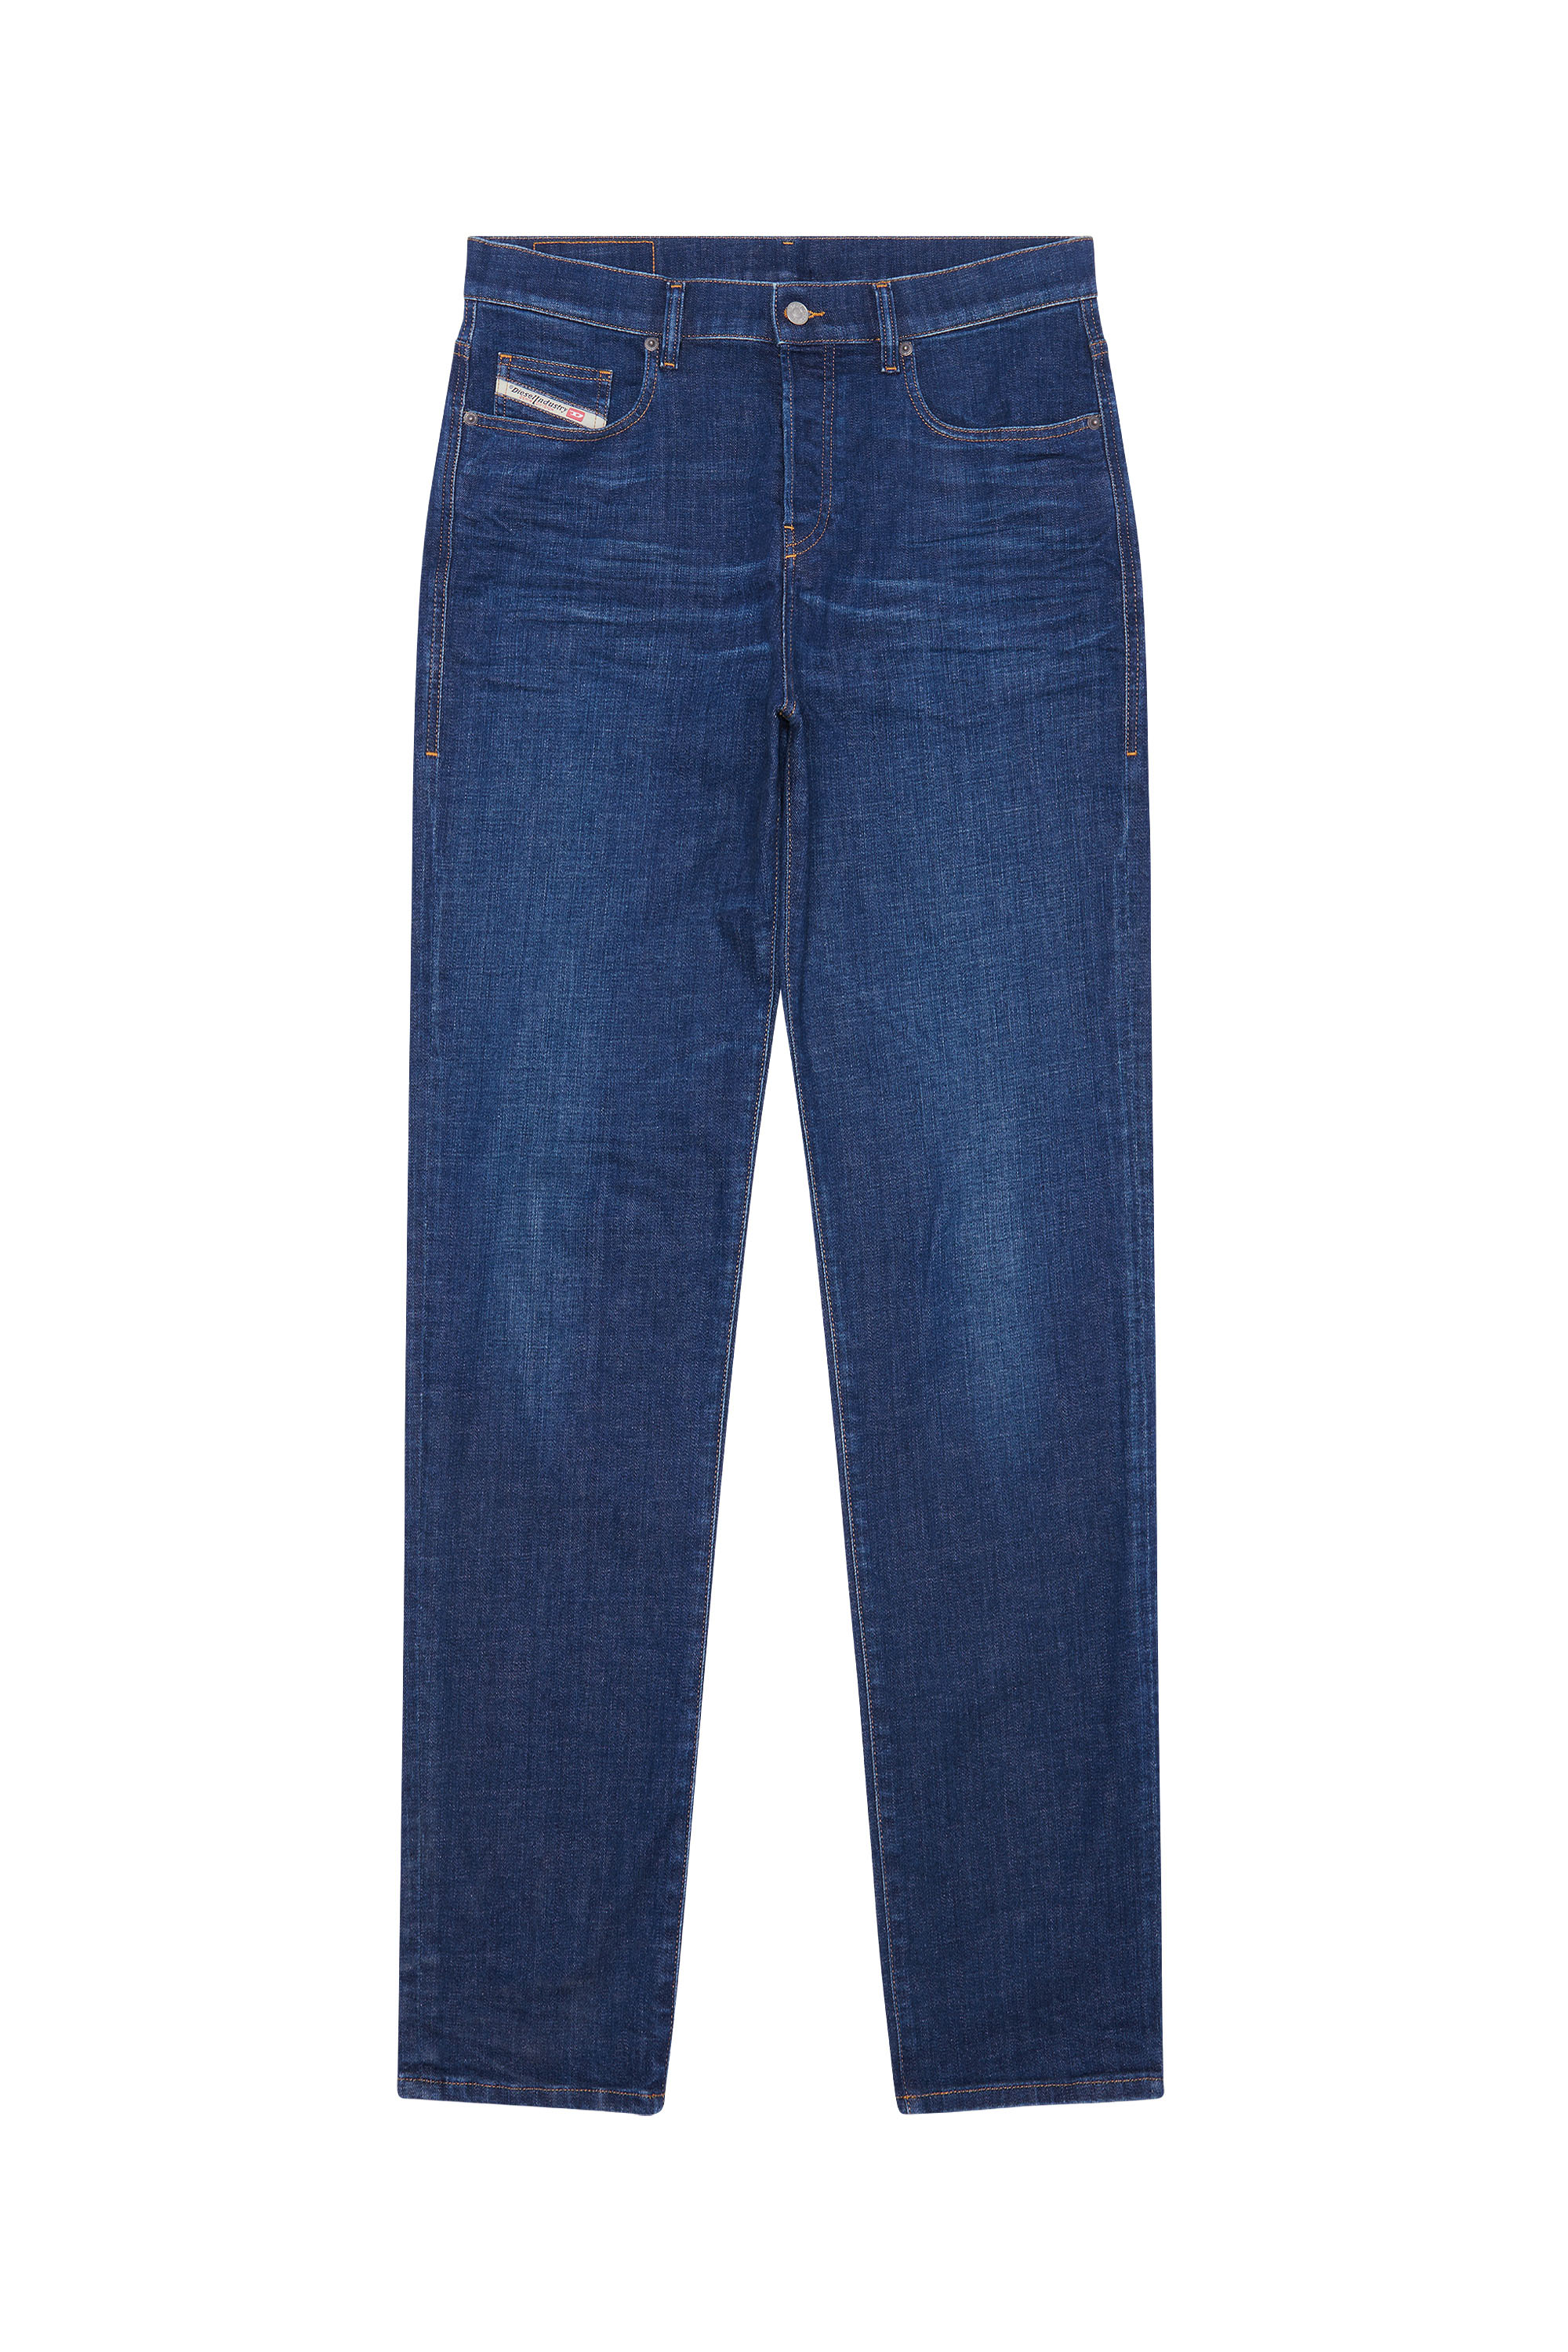 2020 D-VIKER 09D45 Straight Jeans, Blu Scuro - Jeans